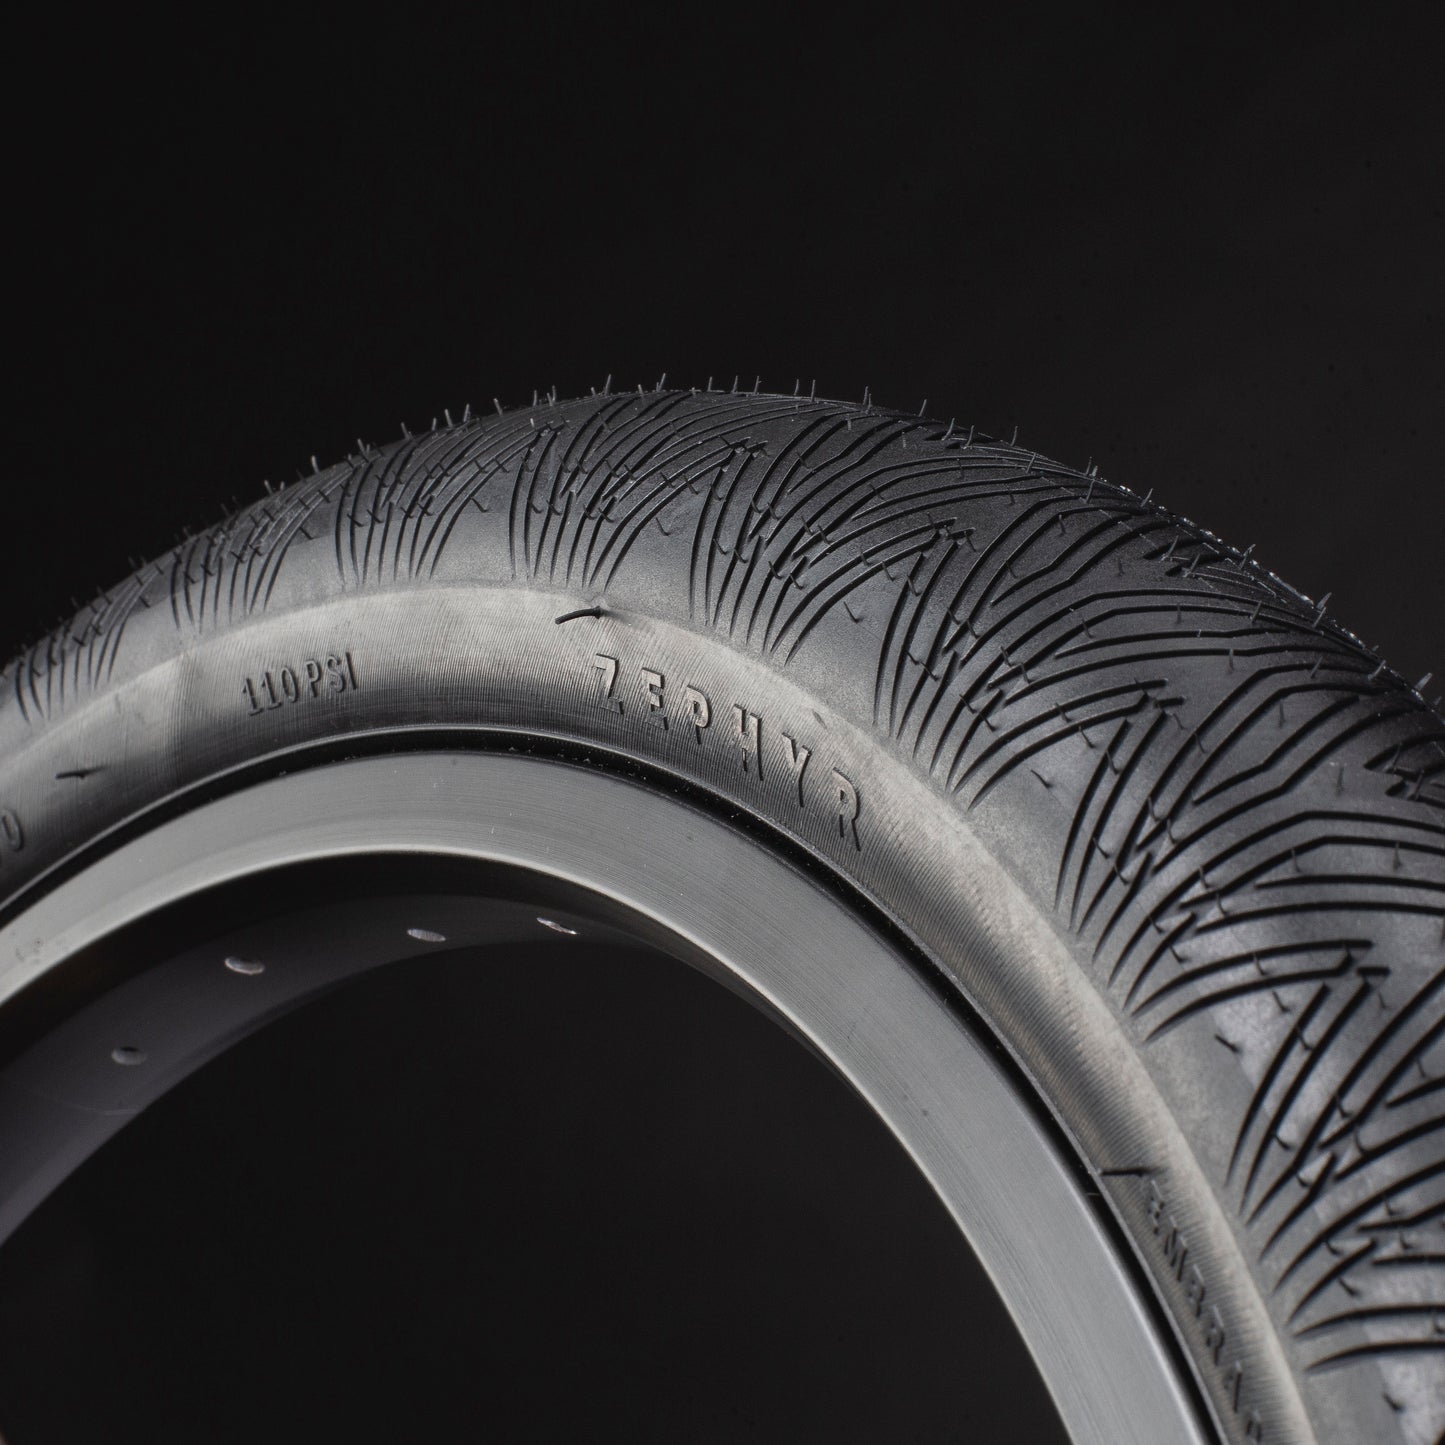 Heresy Zephyr 1.9" Wire Reifen / Tire Black